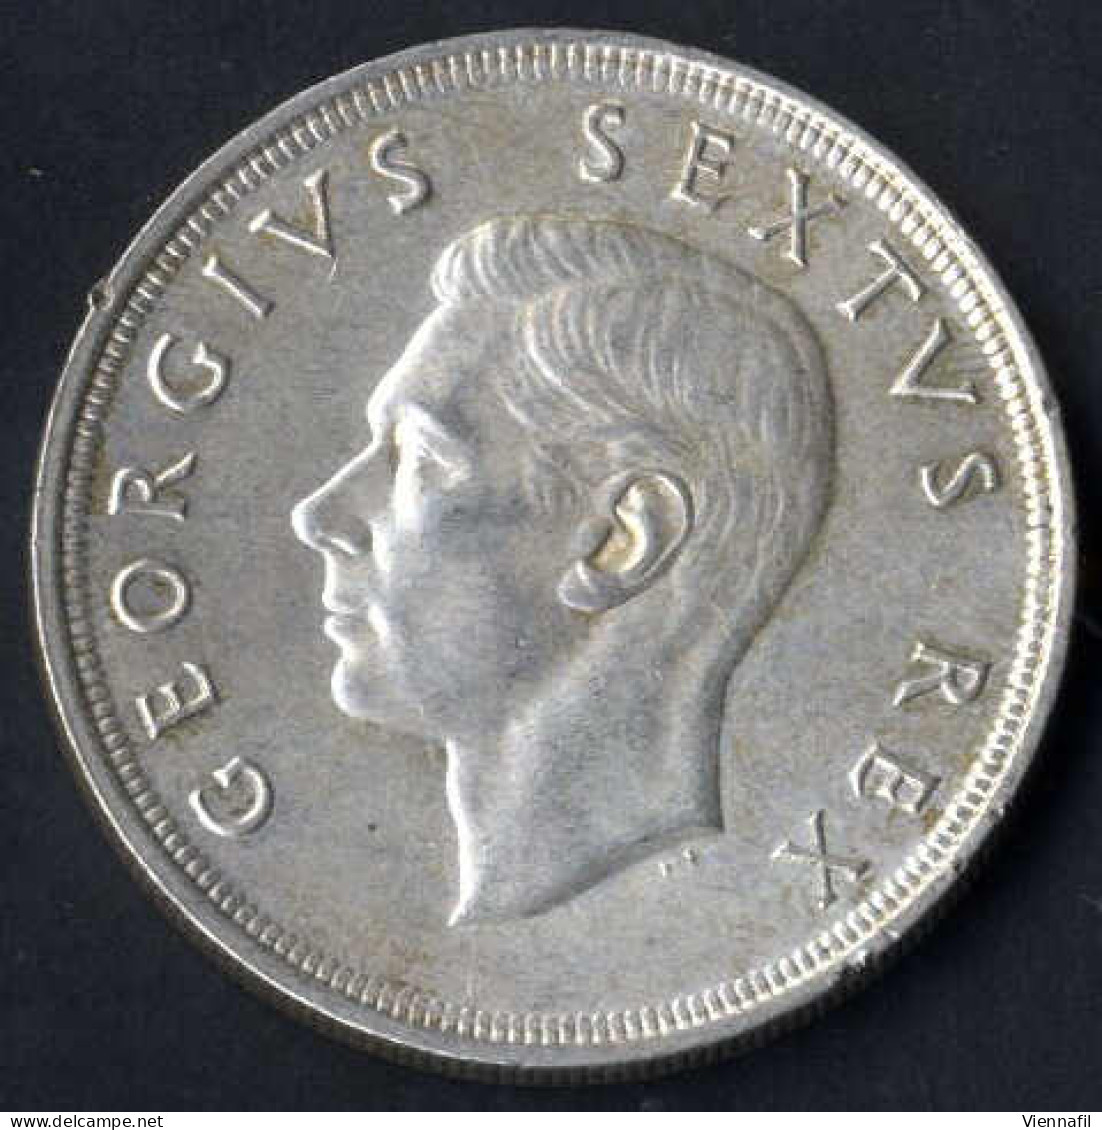 5, 2 Shillings, 1 Penny, Silbermedaille anläßlich der Krönung 1937, Lot mit vier Silbermünzen/medaillen (Fein 69 Gr.) un